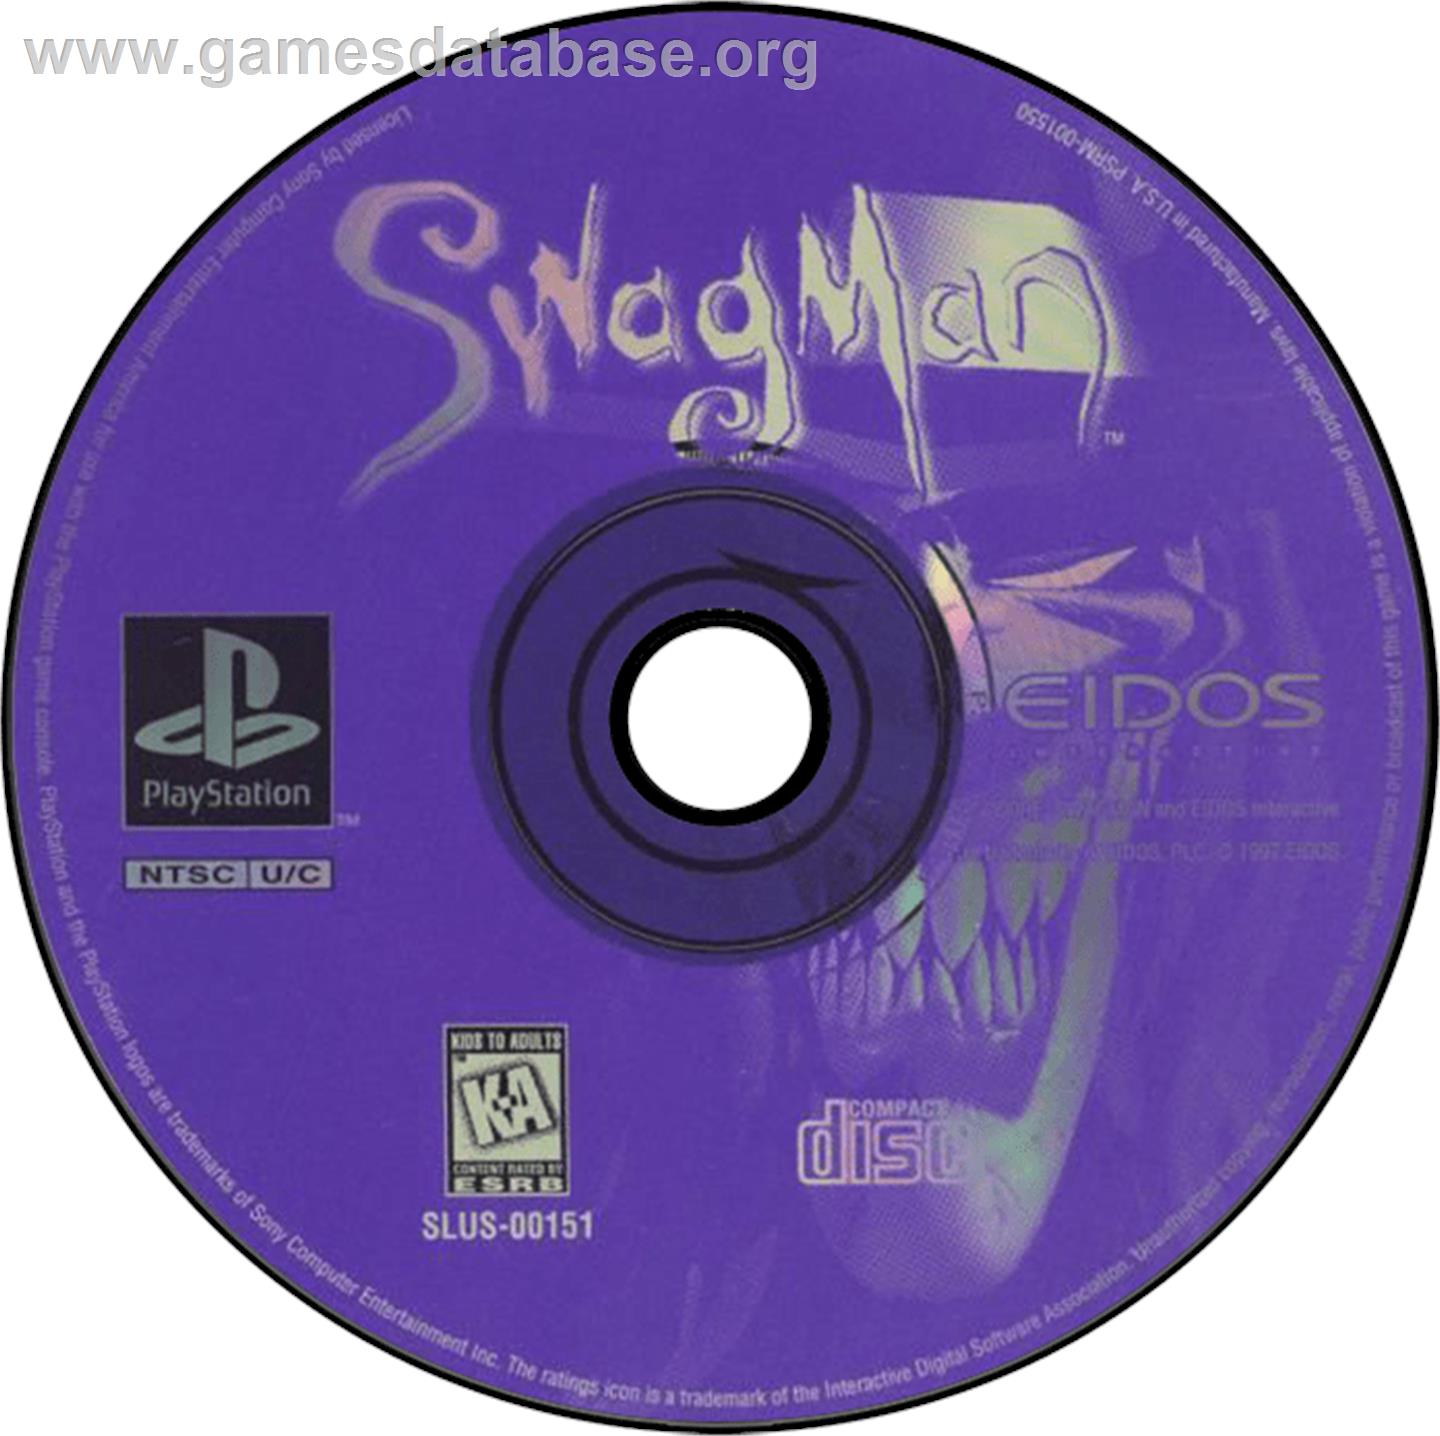 Swagman - Sony Playstation - Artwork - Disc